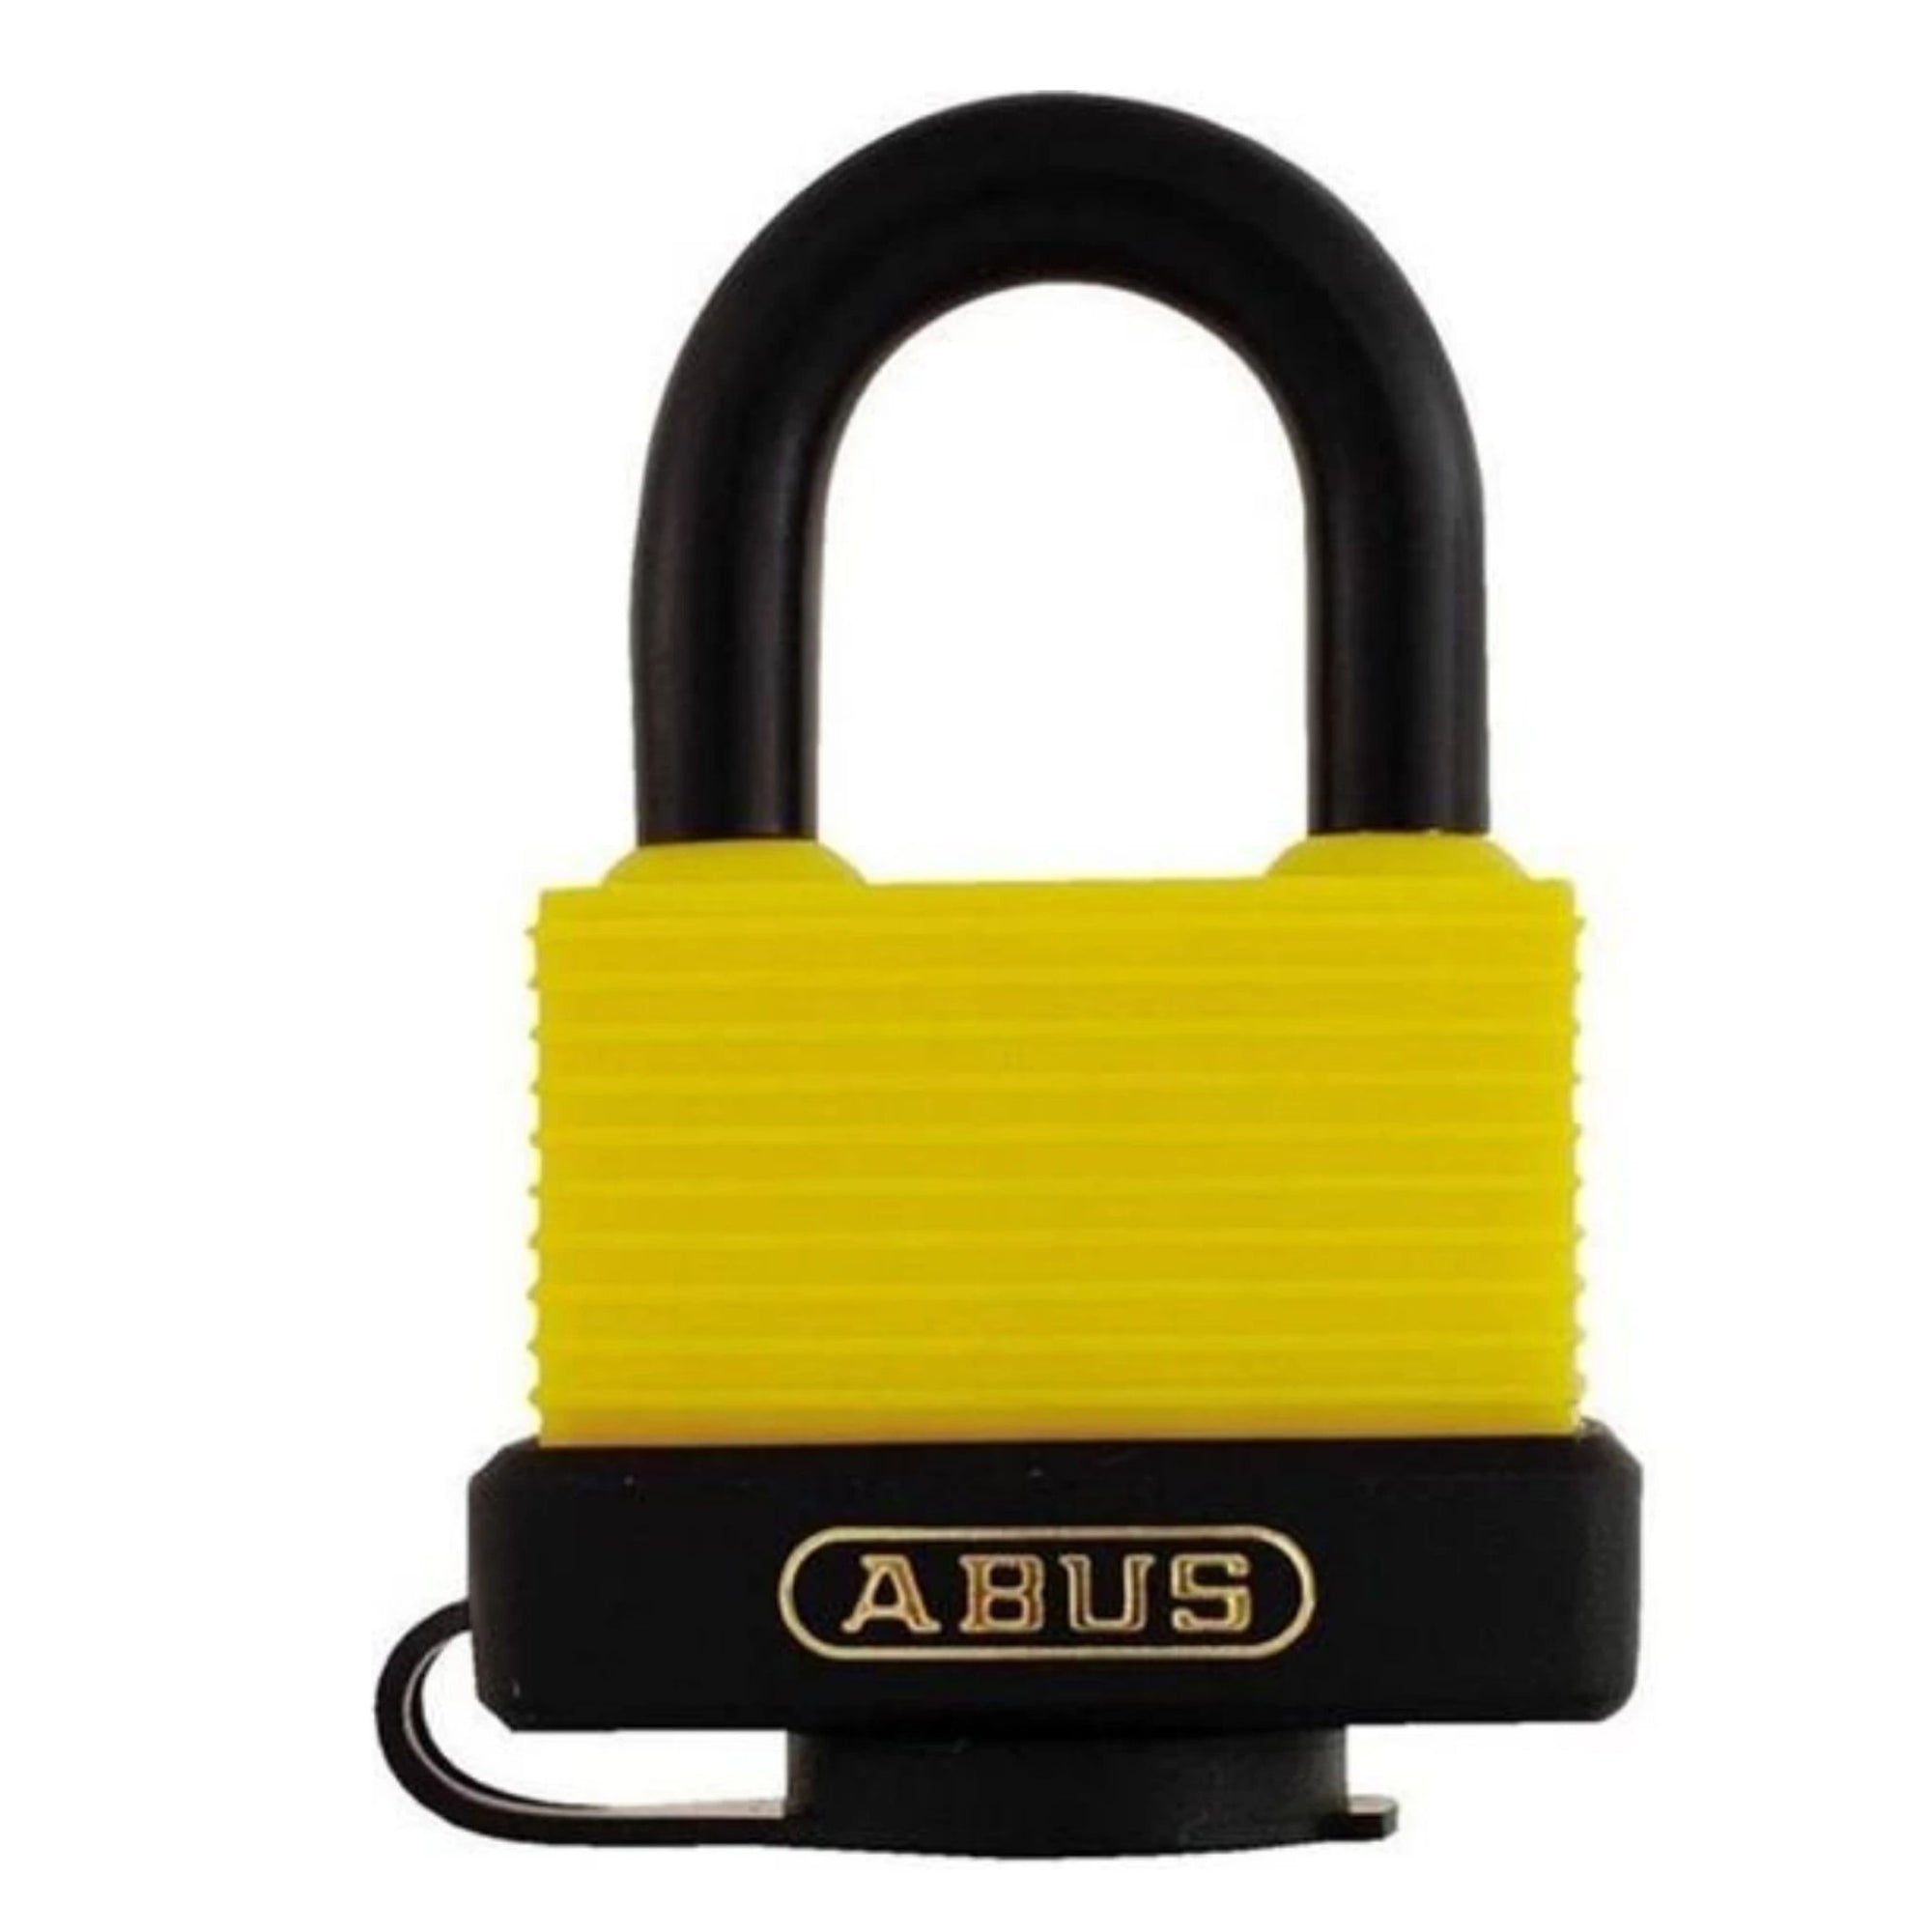 Abus 70/45 KA 6406 Lock Keyed Alike Weatherproof Brass Padlocks Keyed Alike to Match Existing Key Number KA6406 - The Lock Source